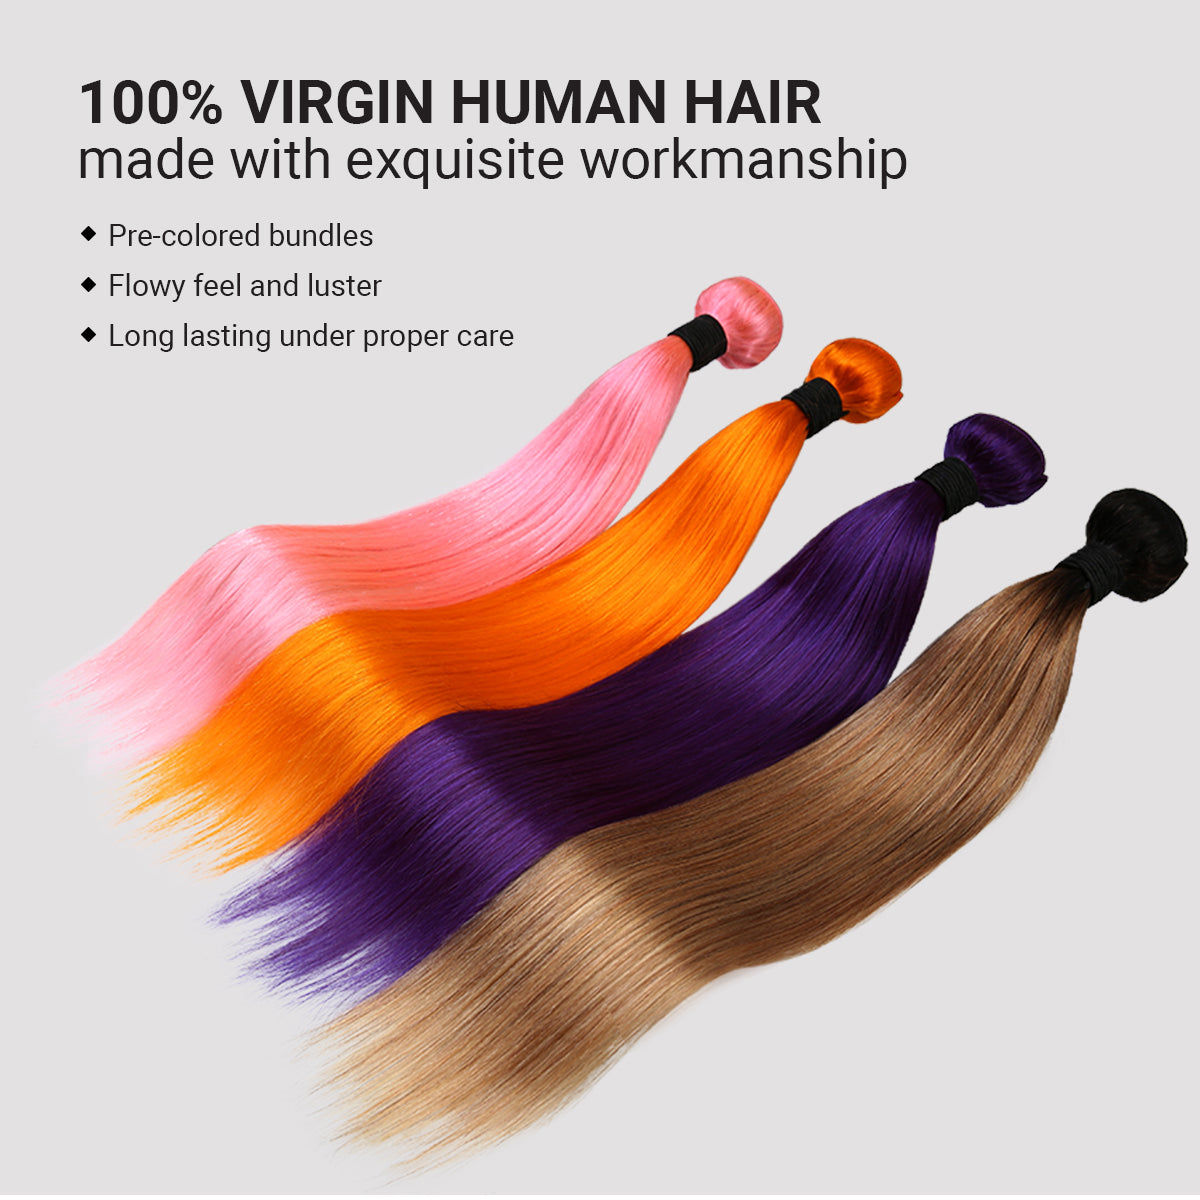 Uniq Hair 100% Virgin Human Hair Brazilian Bundle Hair Weave 9A Straight #ORANGE Find Your New Look Today!